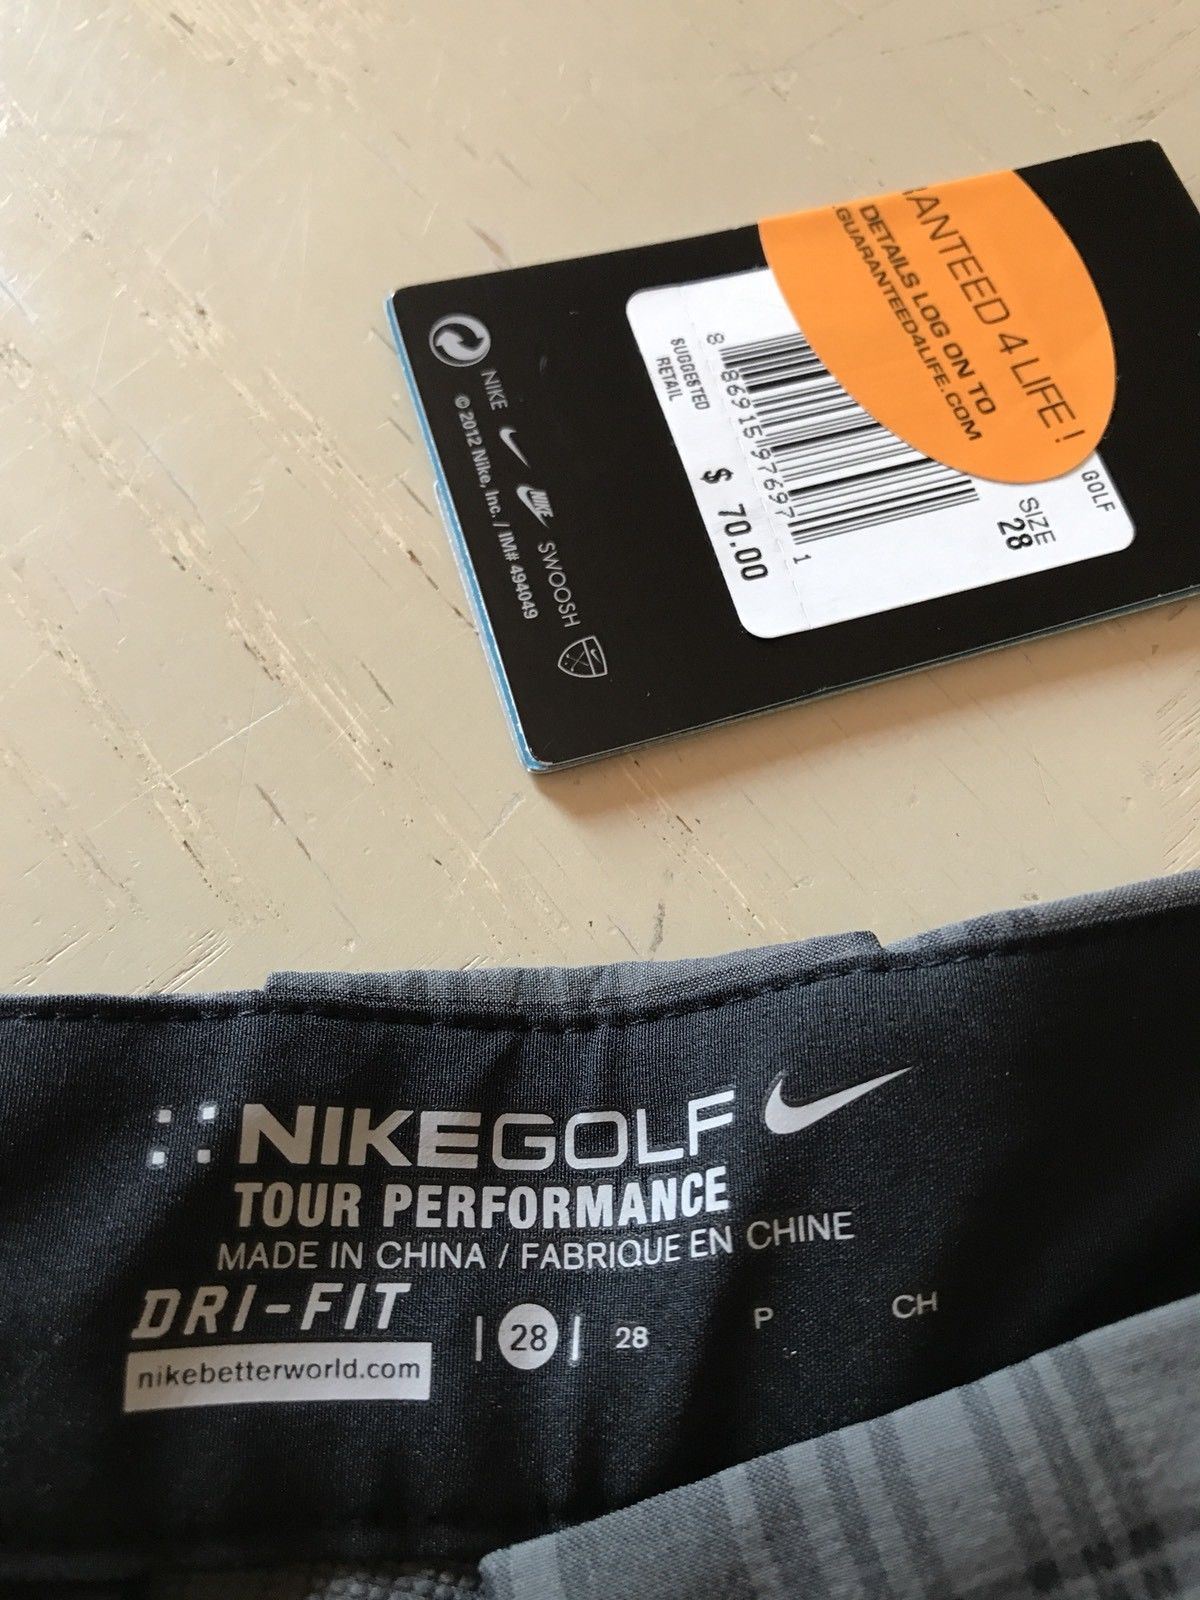 New $70 Nike Golf Short Pants DK Gray Size 28 - BAYSUPERSTORE